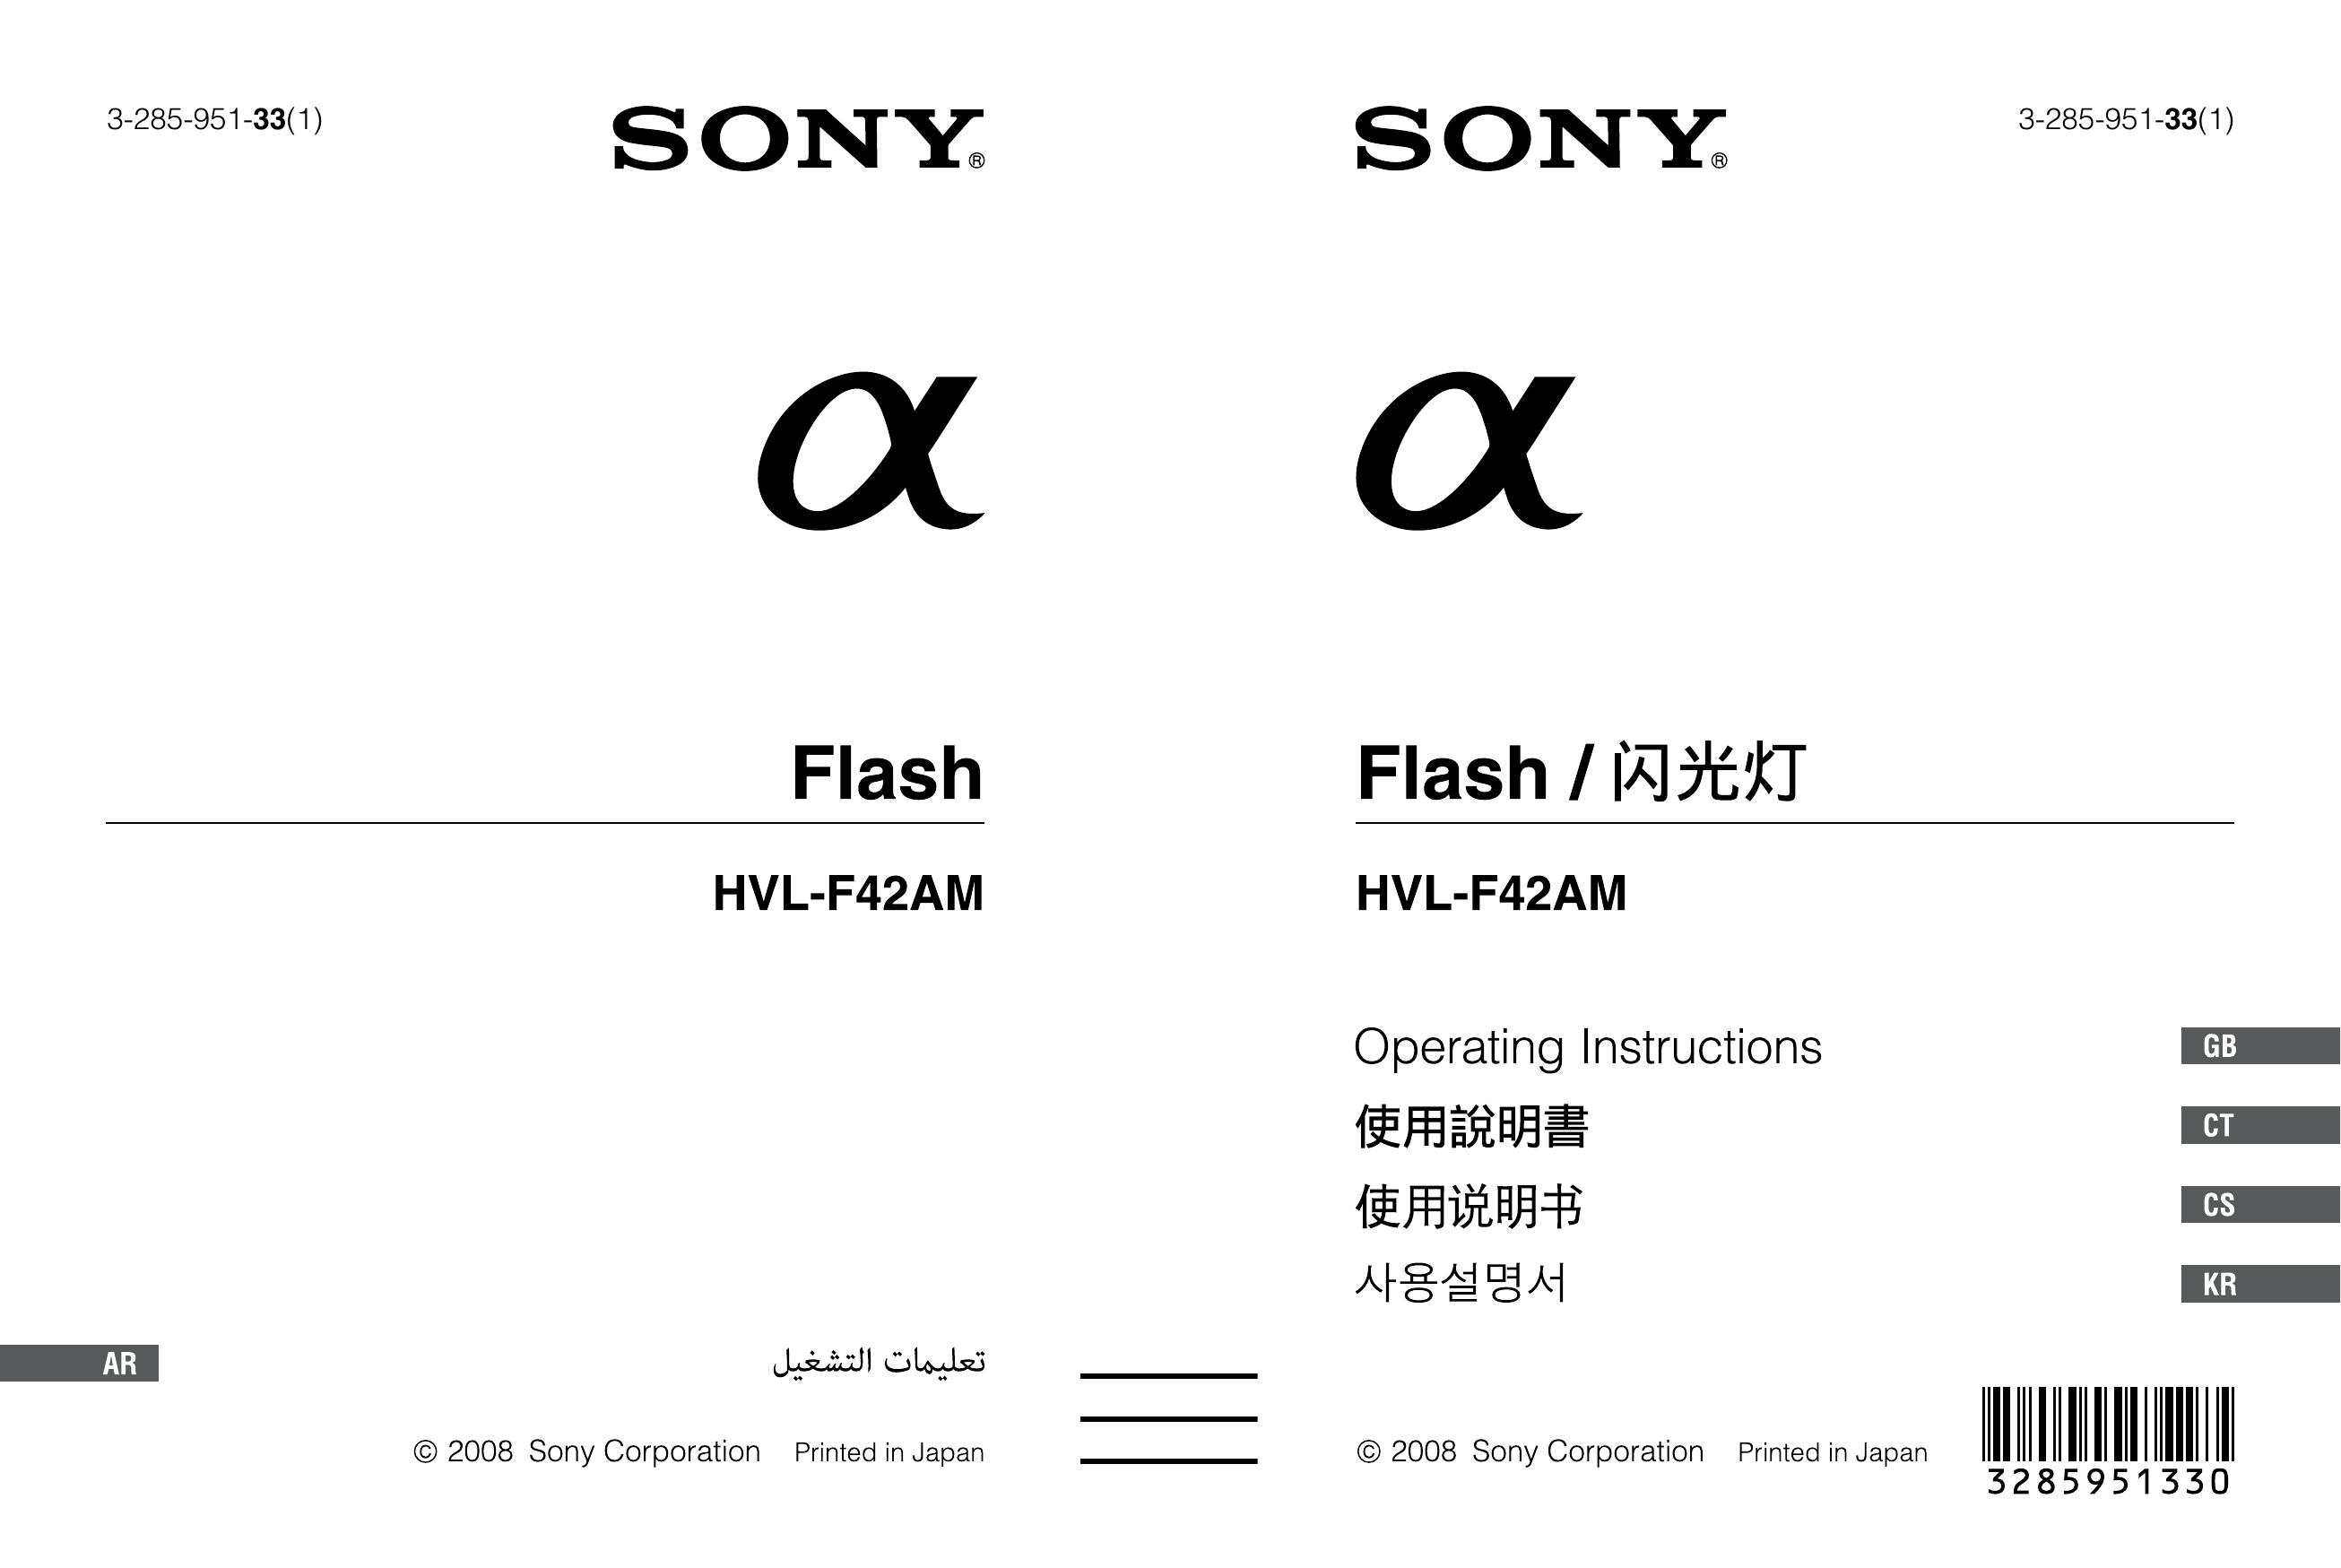 Sony HVL-F42AM Camera Flash User Manual